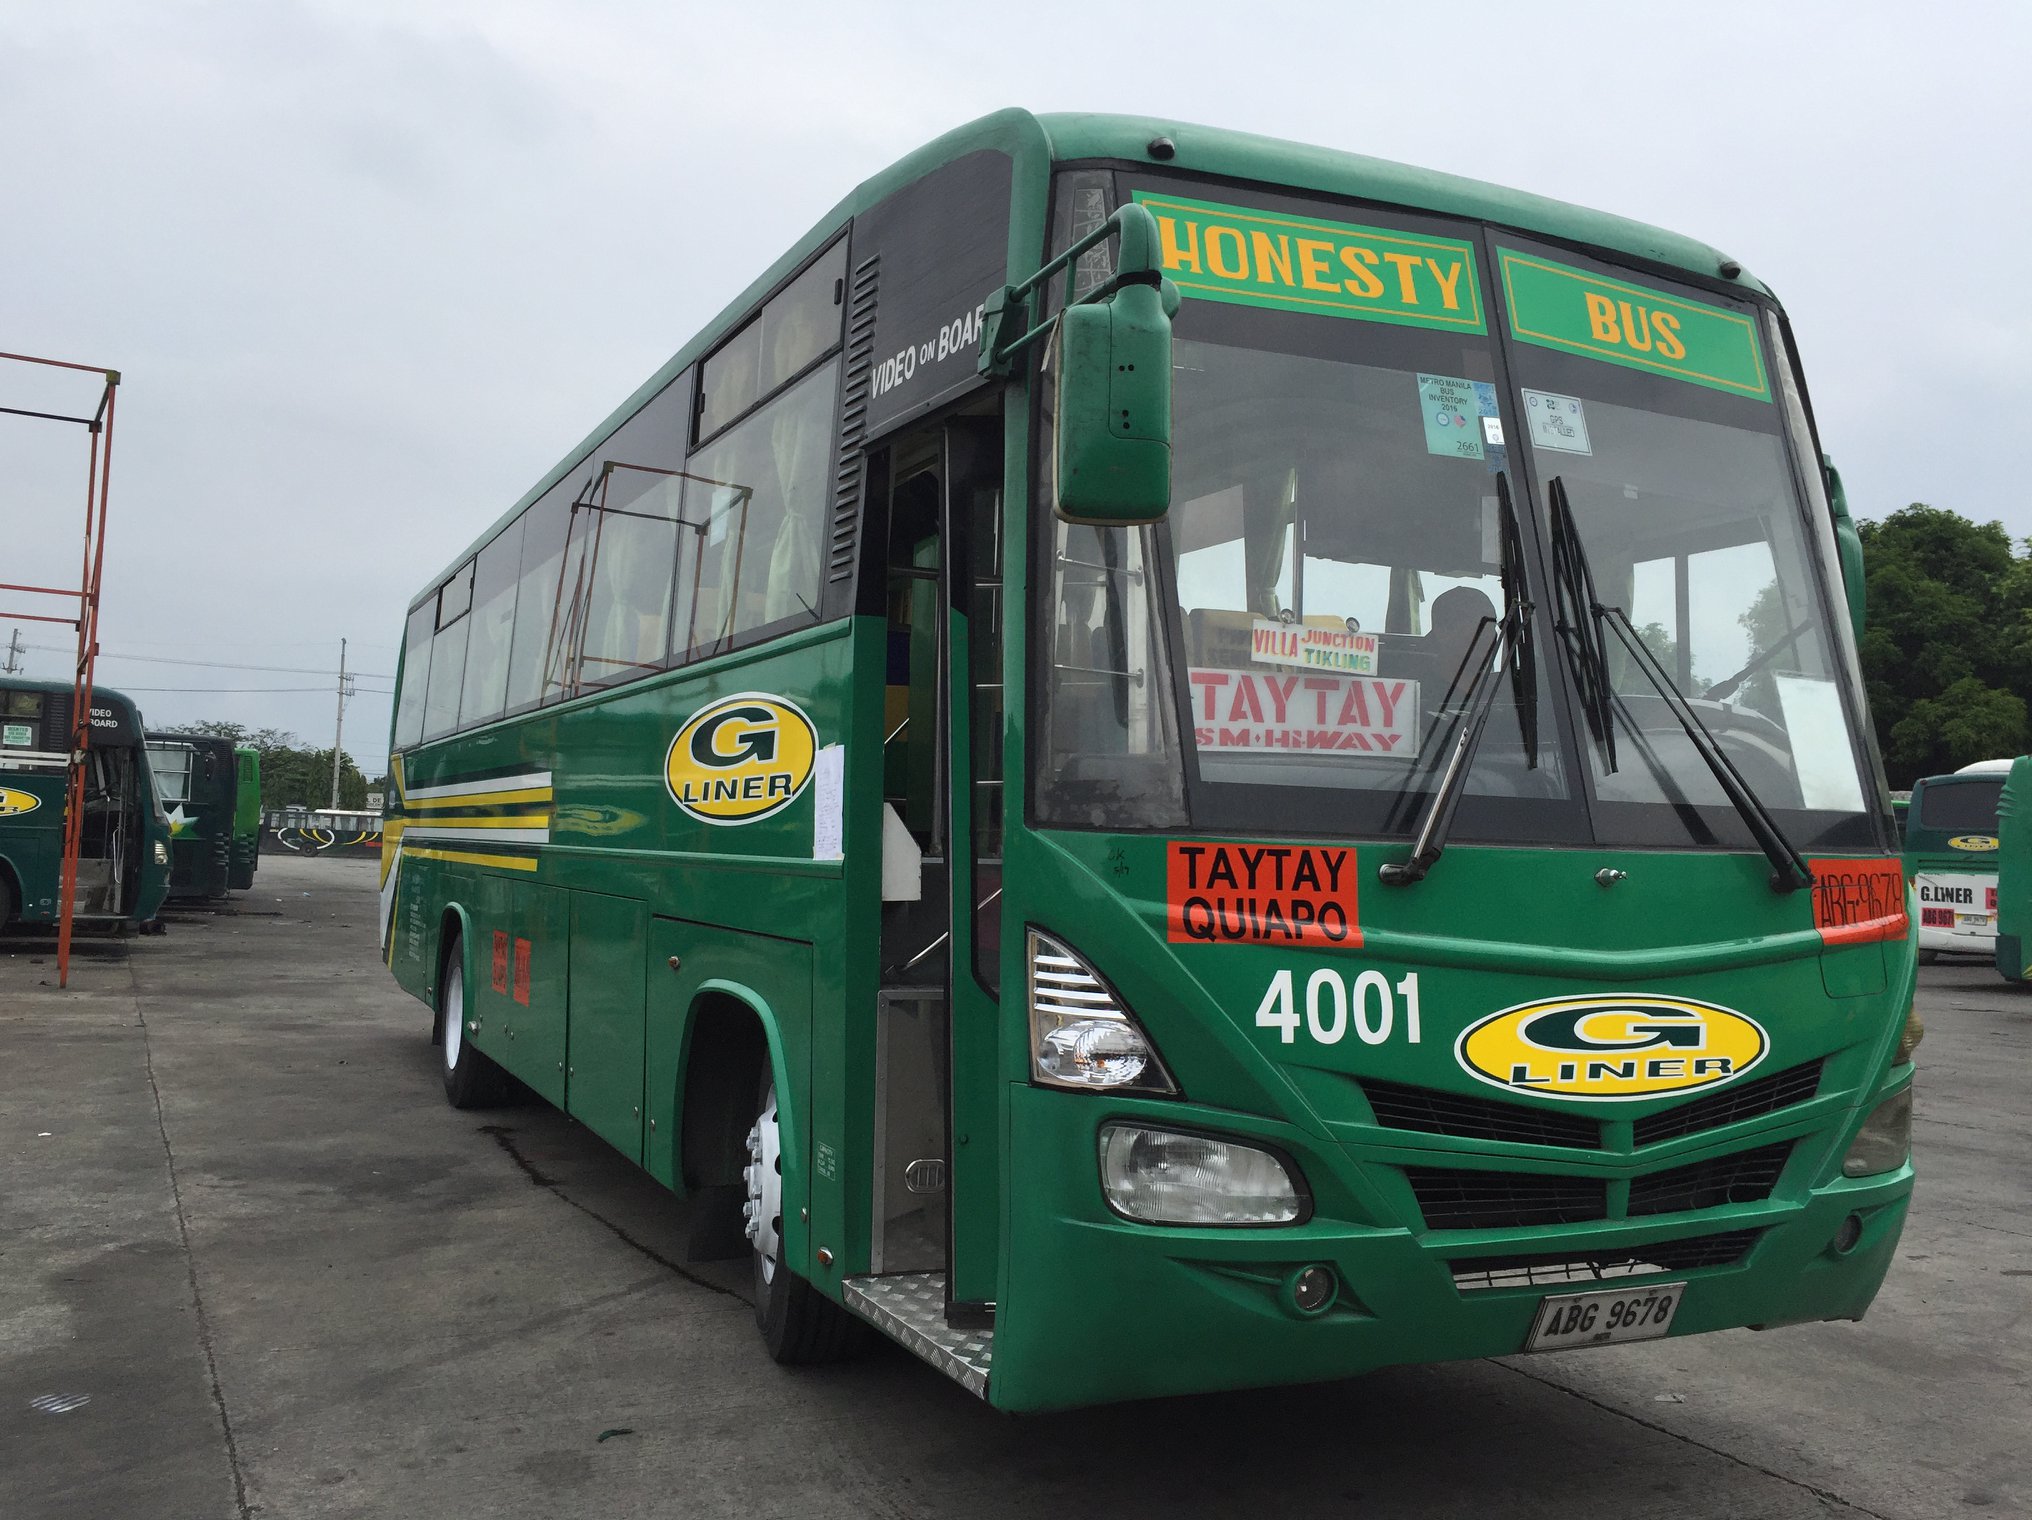 G-Liner’s Honesty Bus. Photo via their Facebook account.